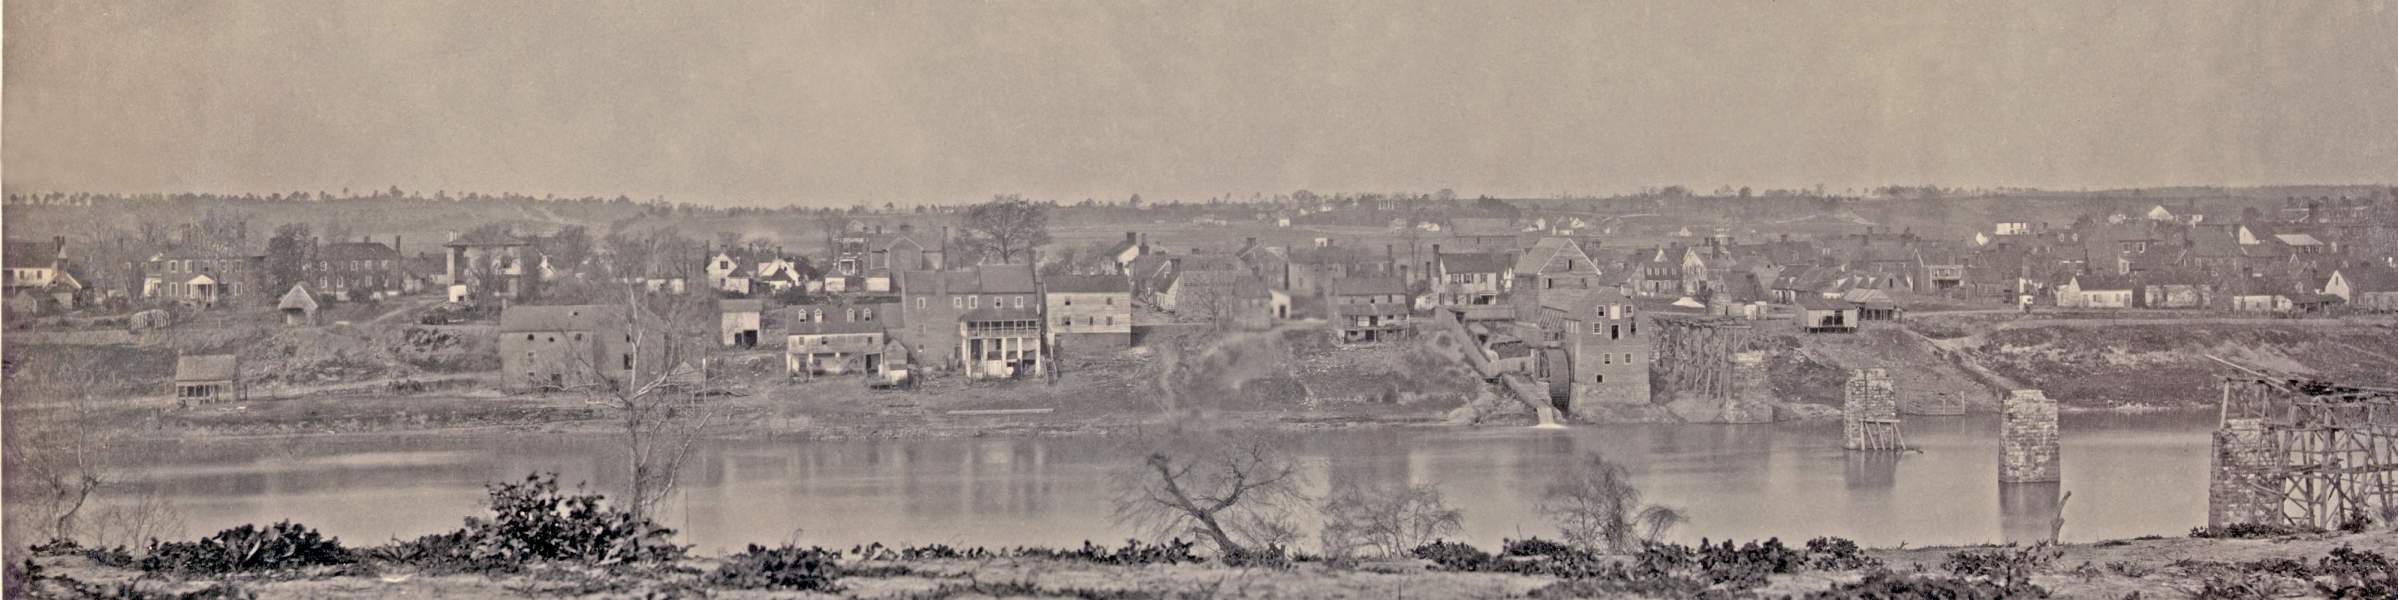 Fredericksburg, Virginia, May 3, 1863, photograph, zoomable image